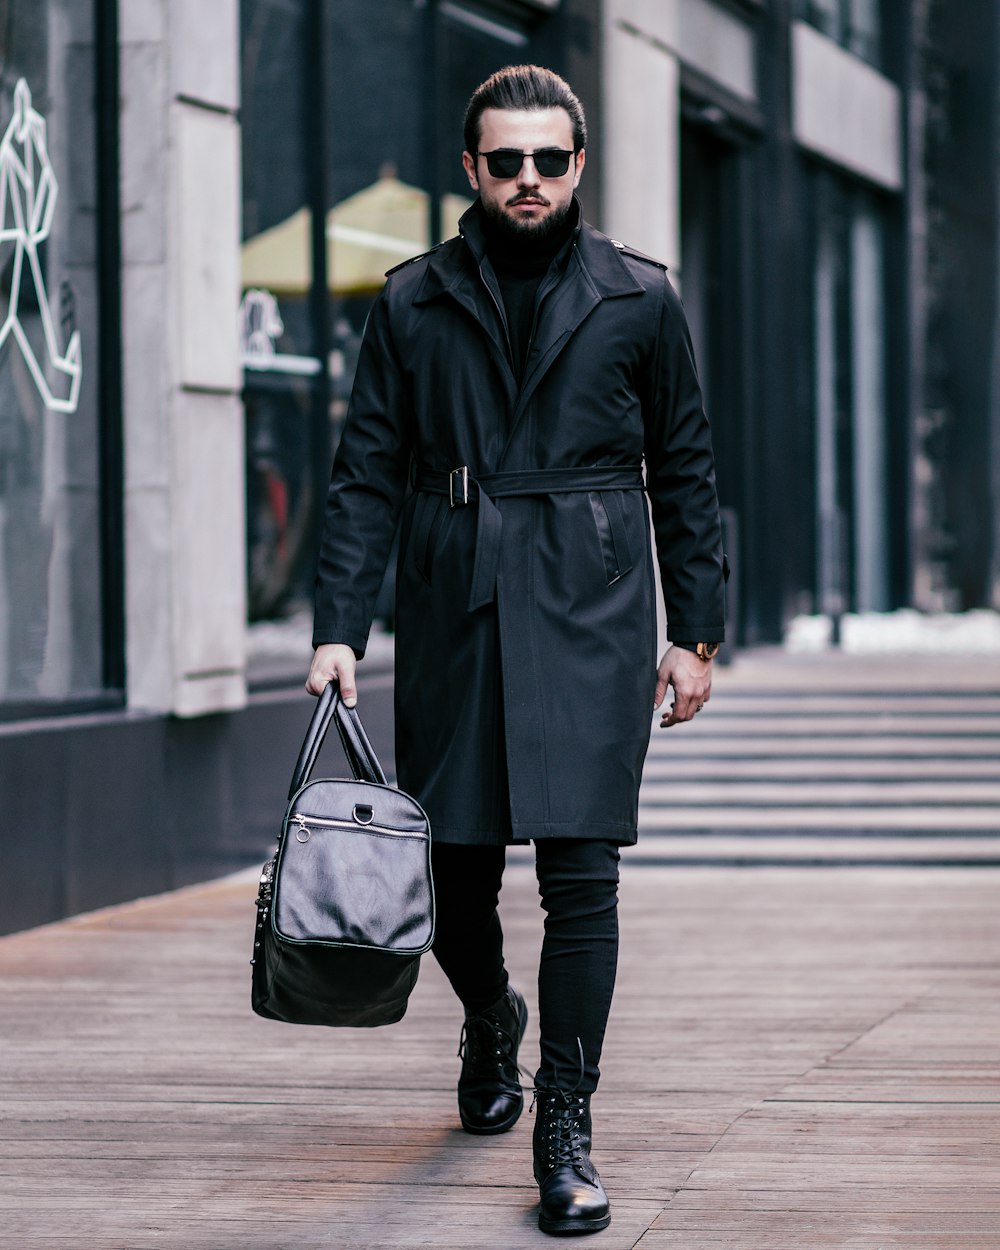 a man walking down a street carrying a bag